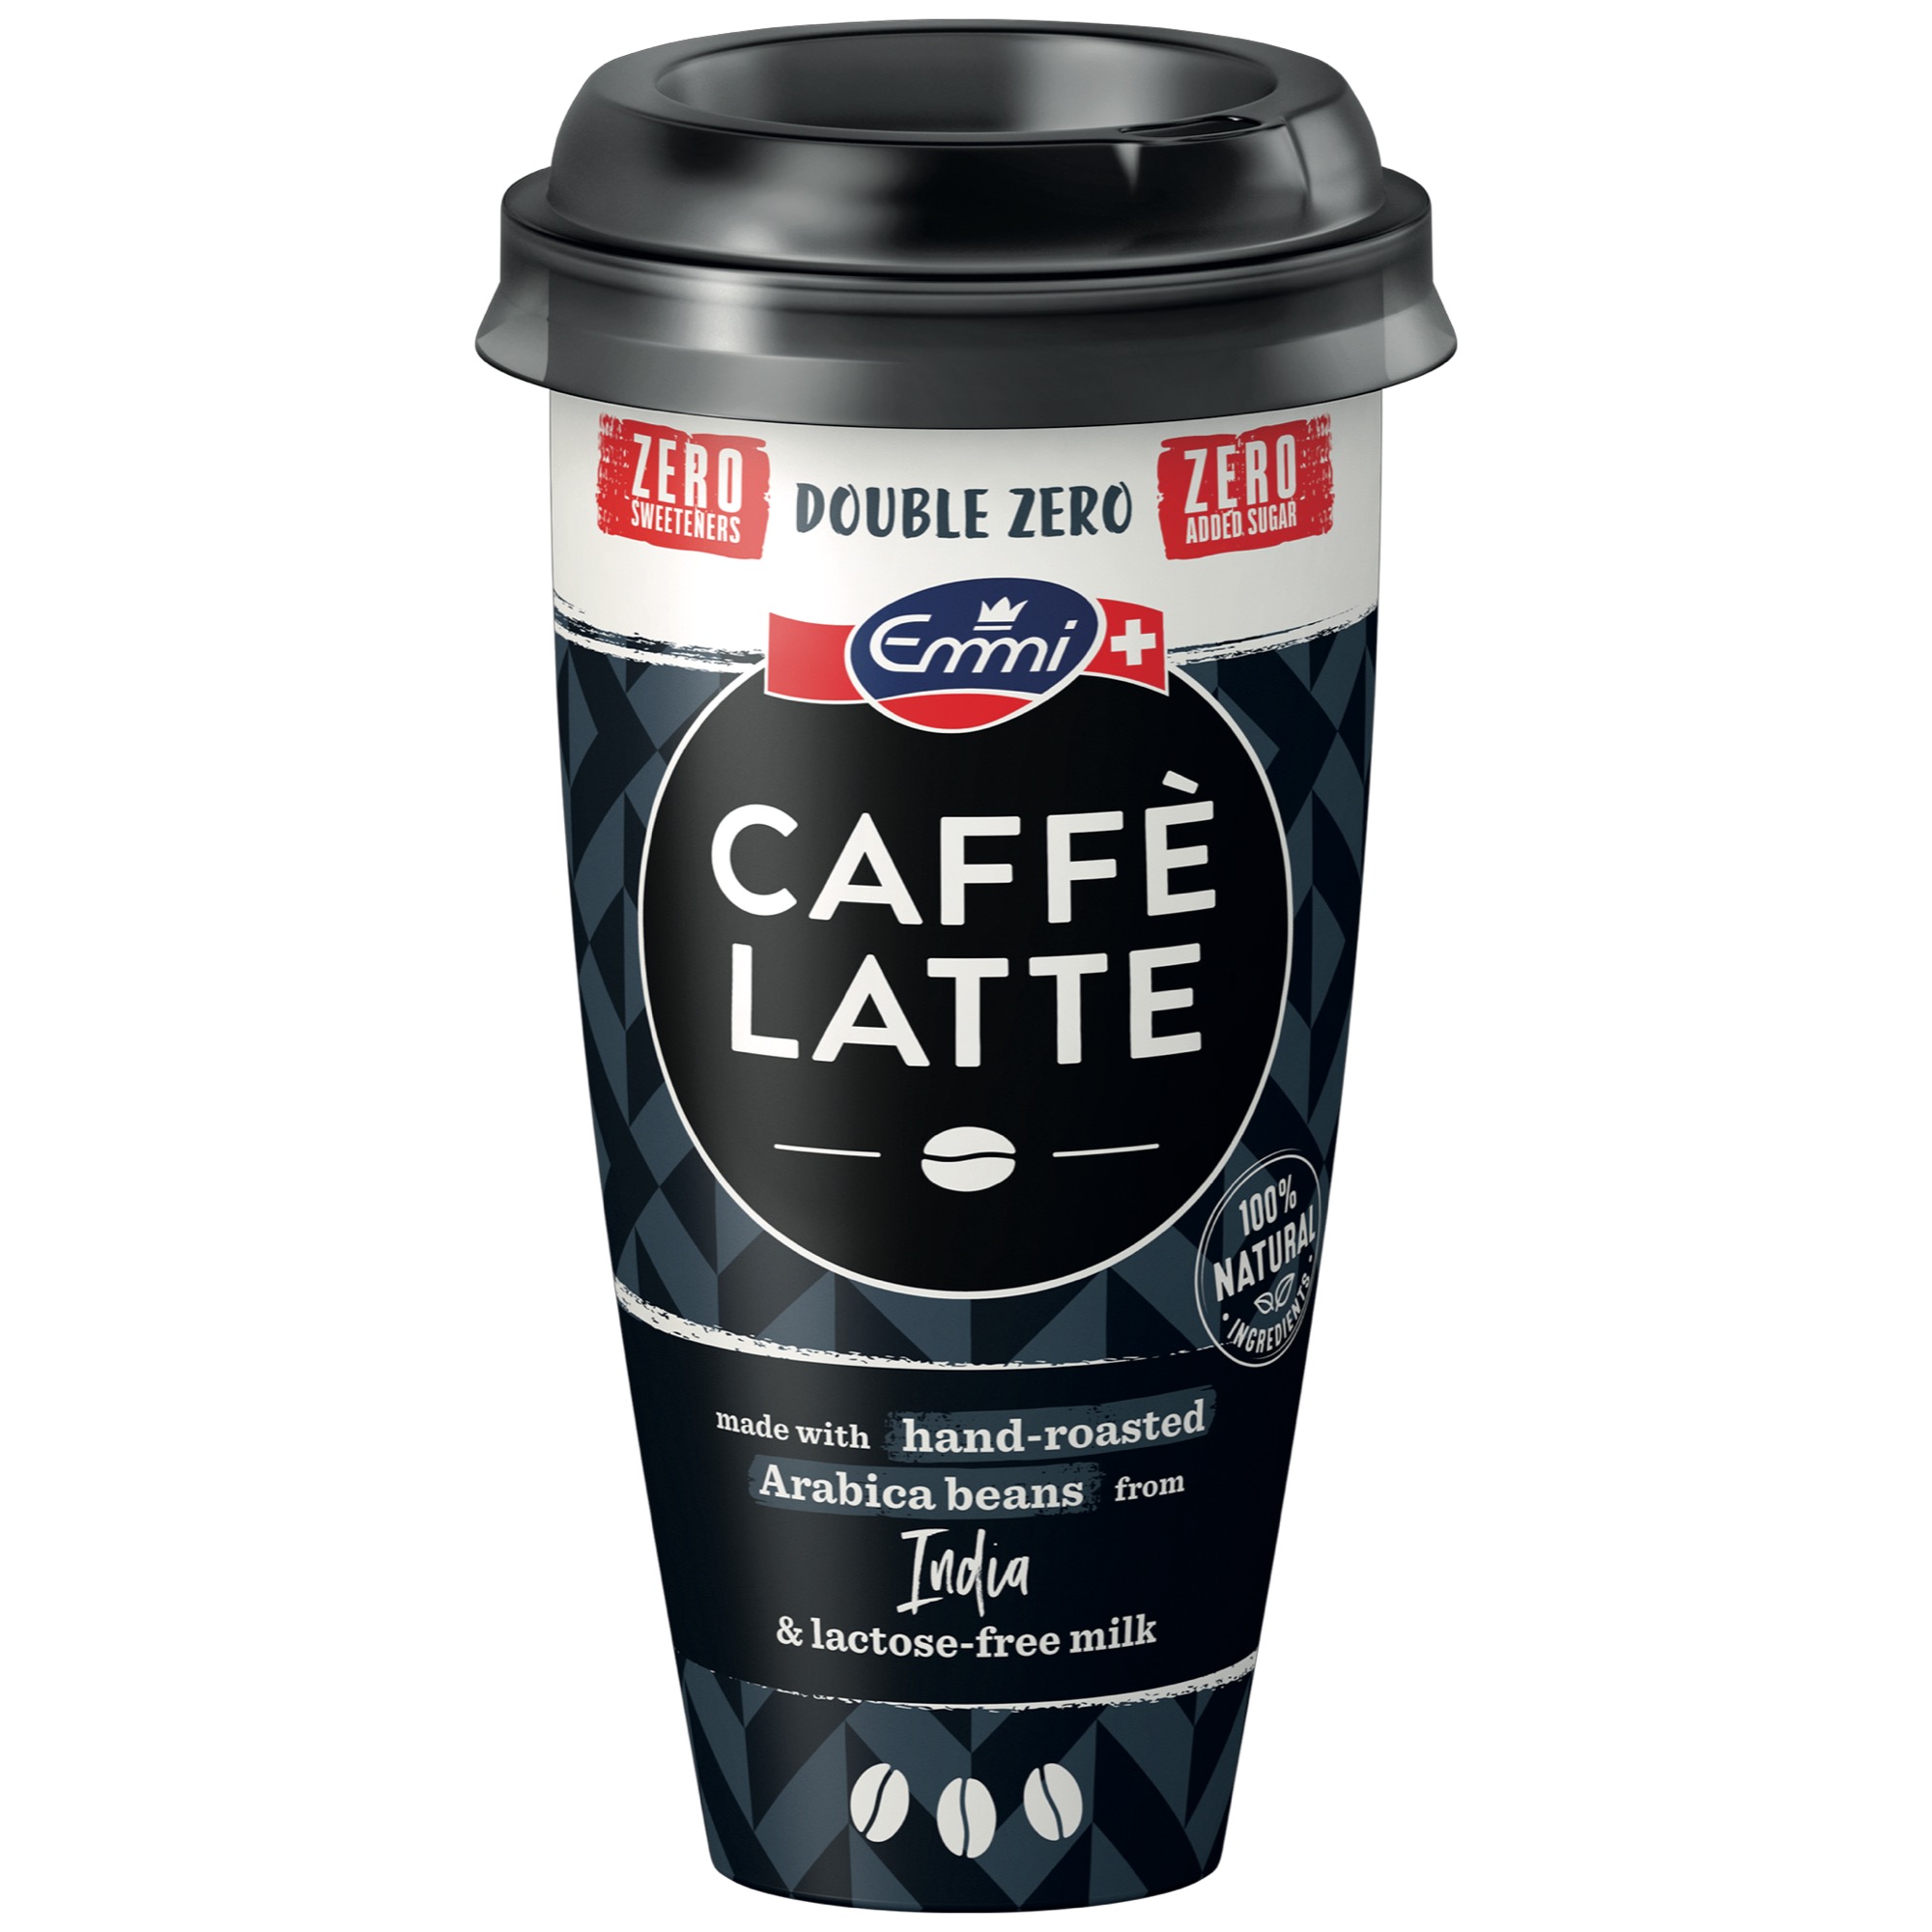 Emmi Caffe Latte 230ml Double Zero